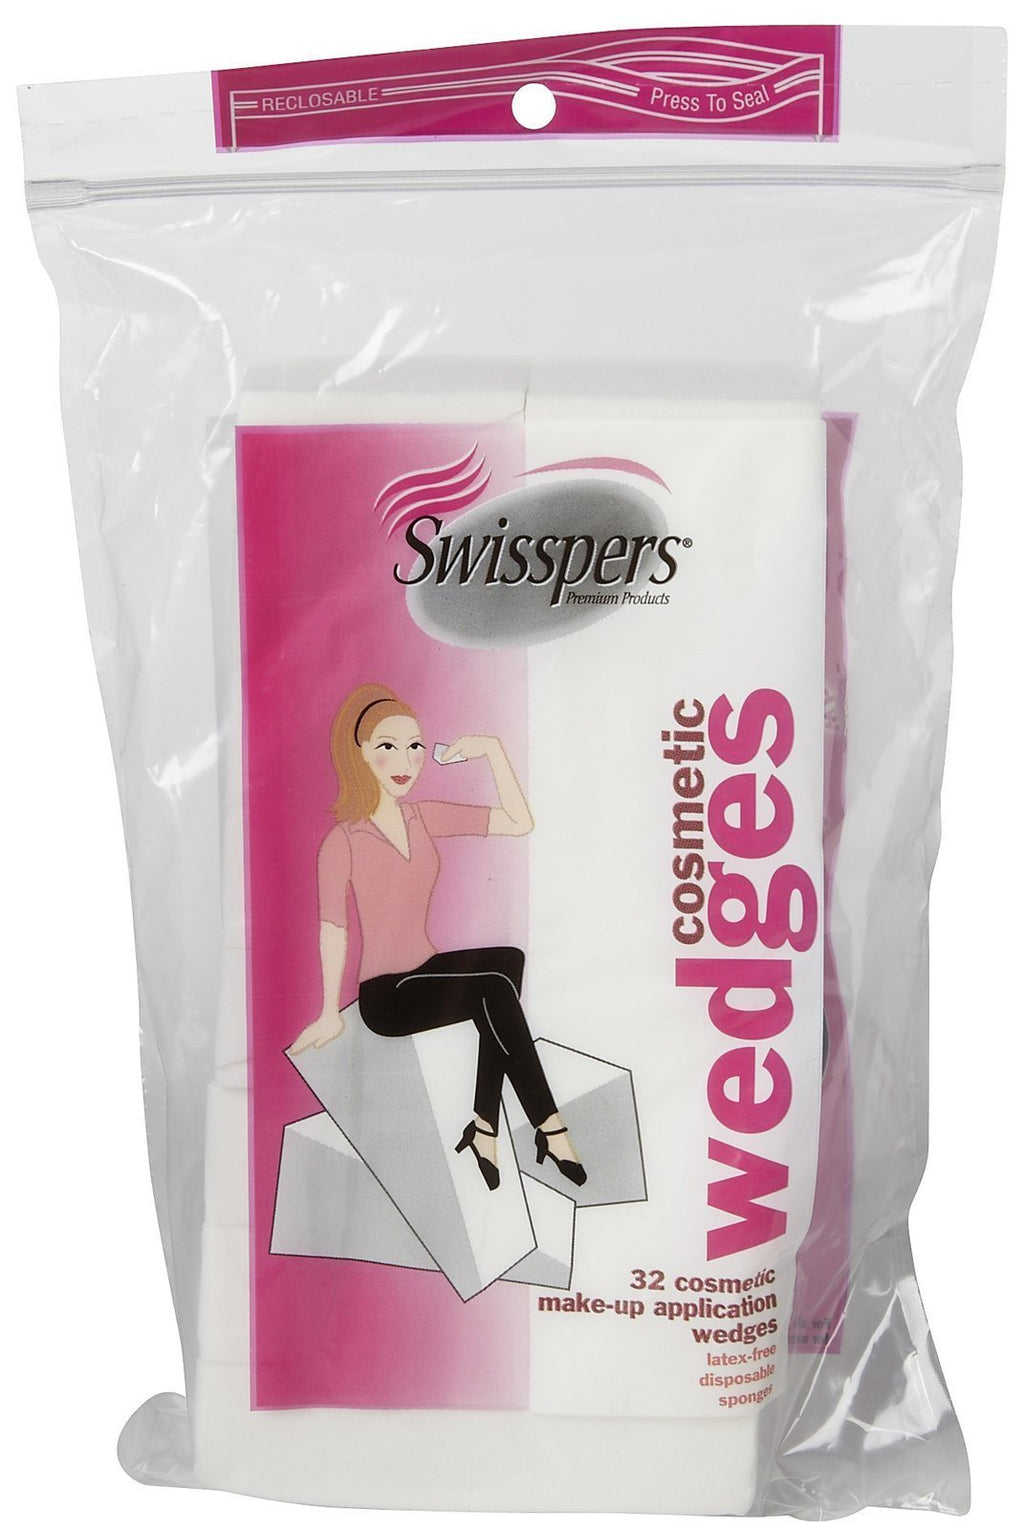 [Australia] - Swisspers Premium Cosmetic Wedges, 32 Count 